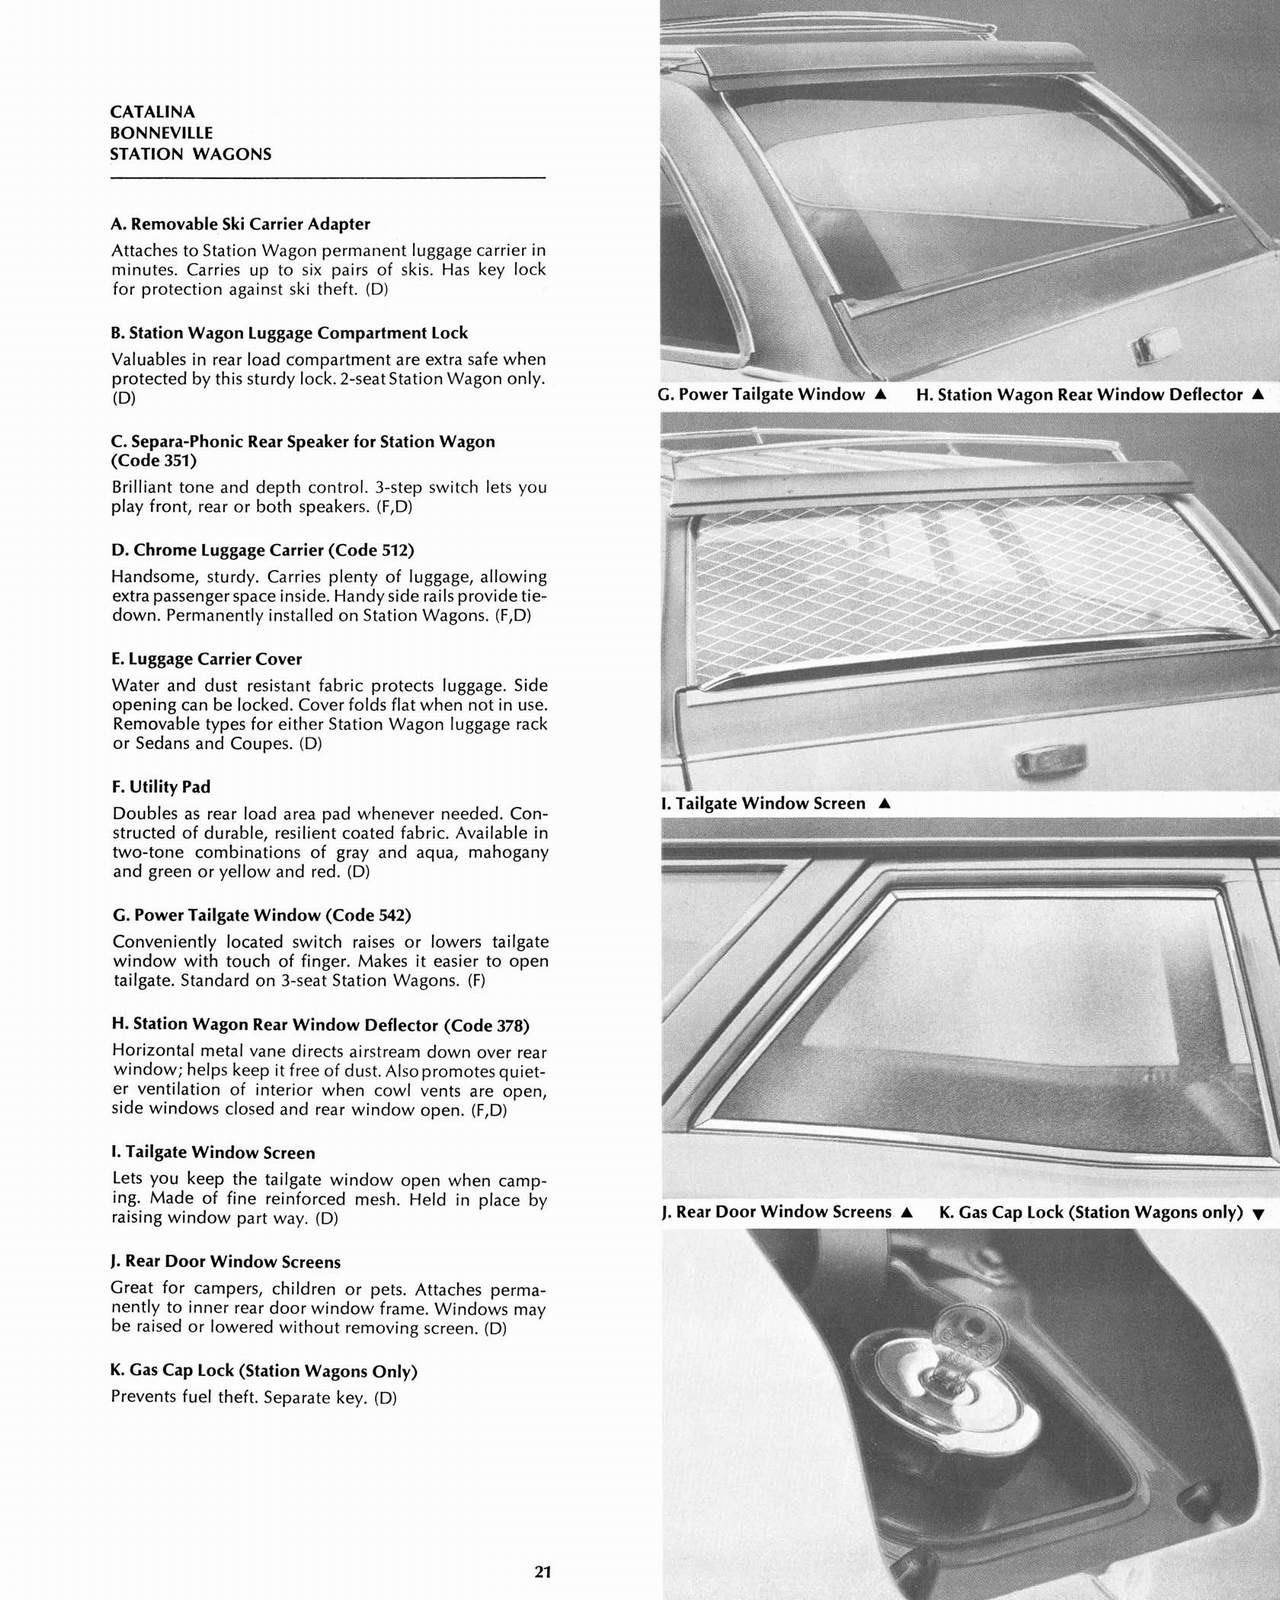 n_1966 Pontiac Accessories Catalog-21.jpg